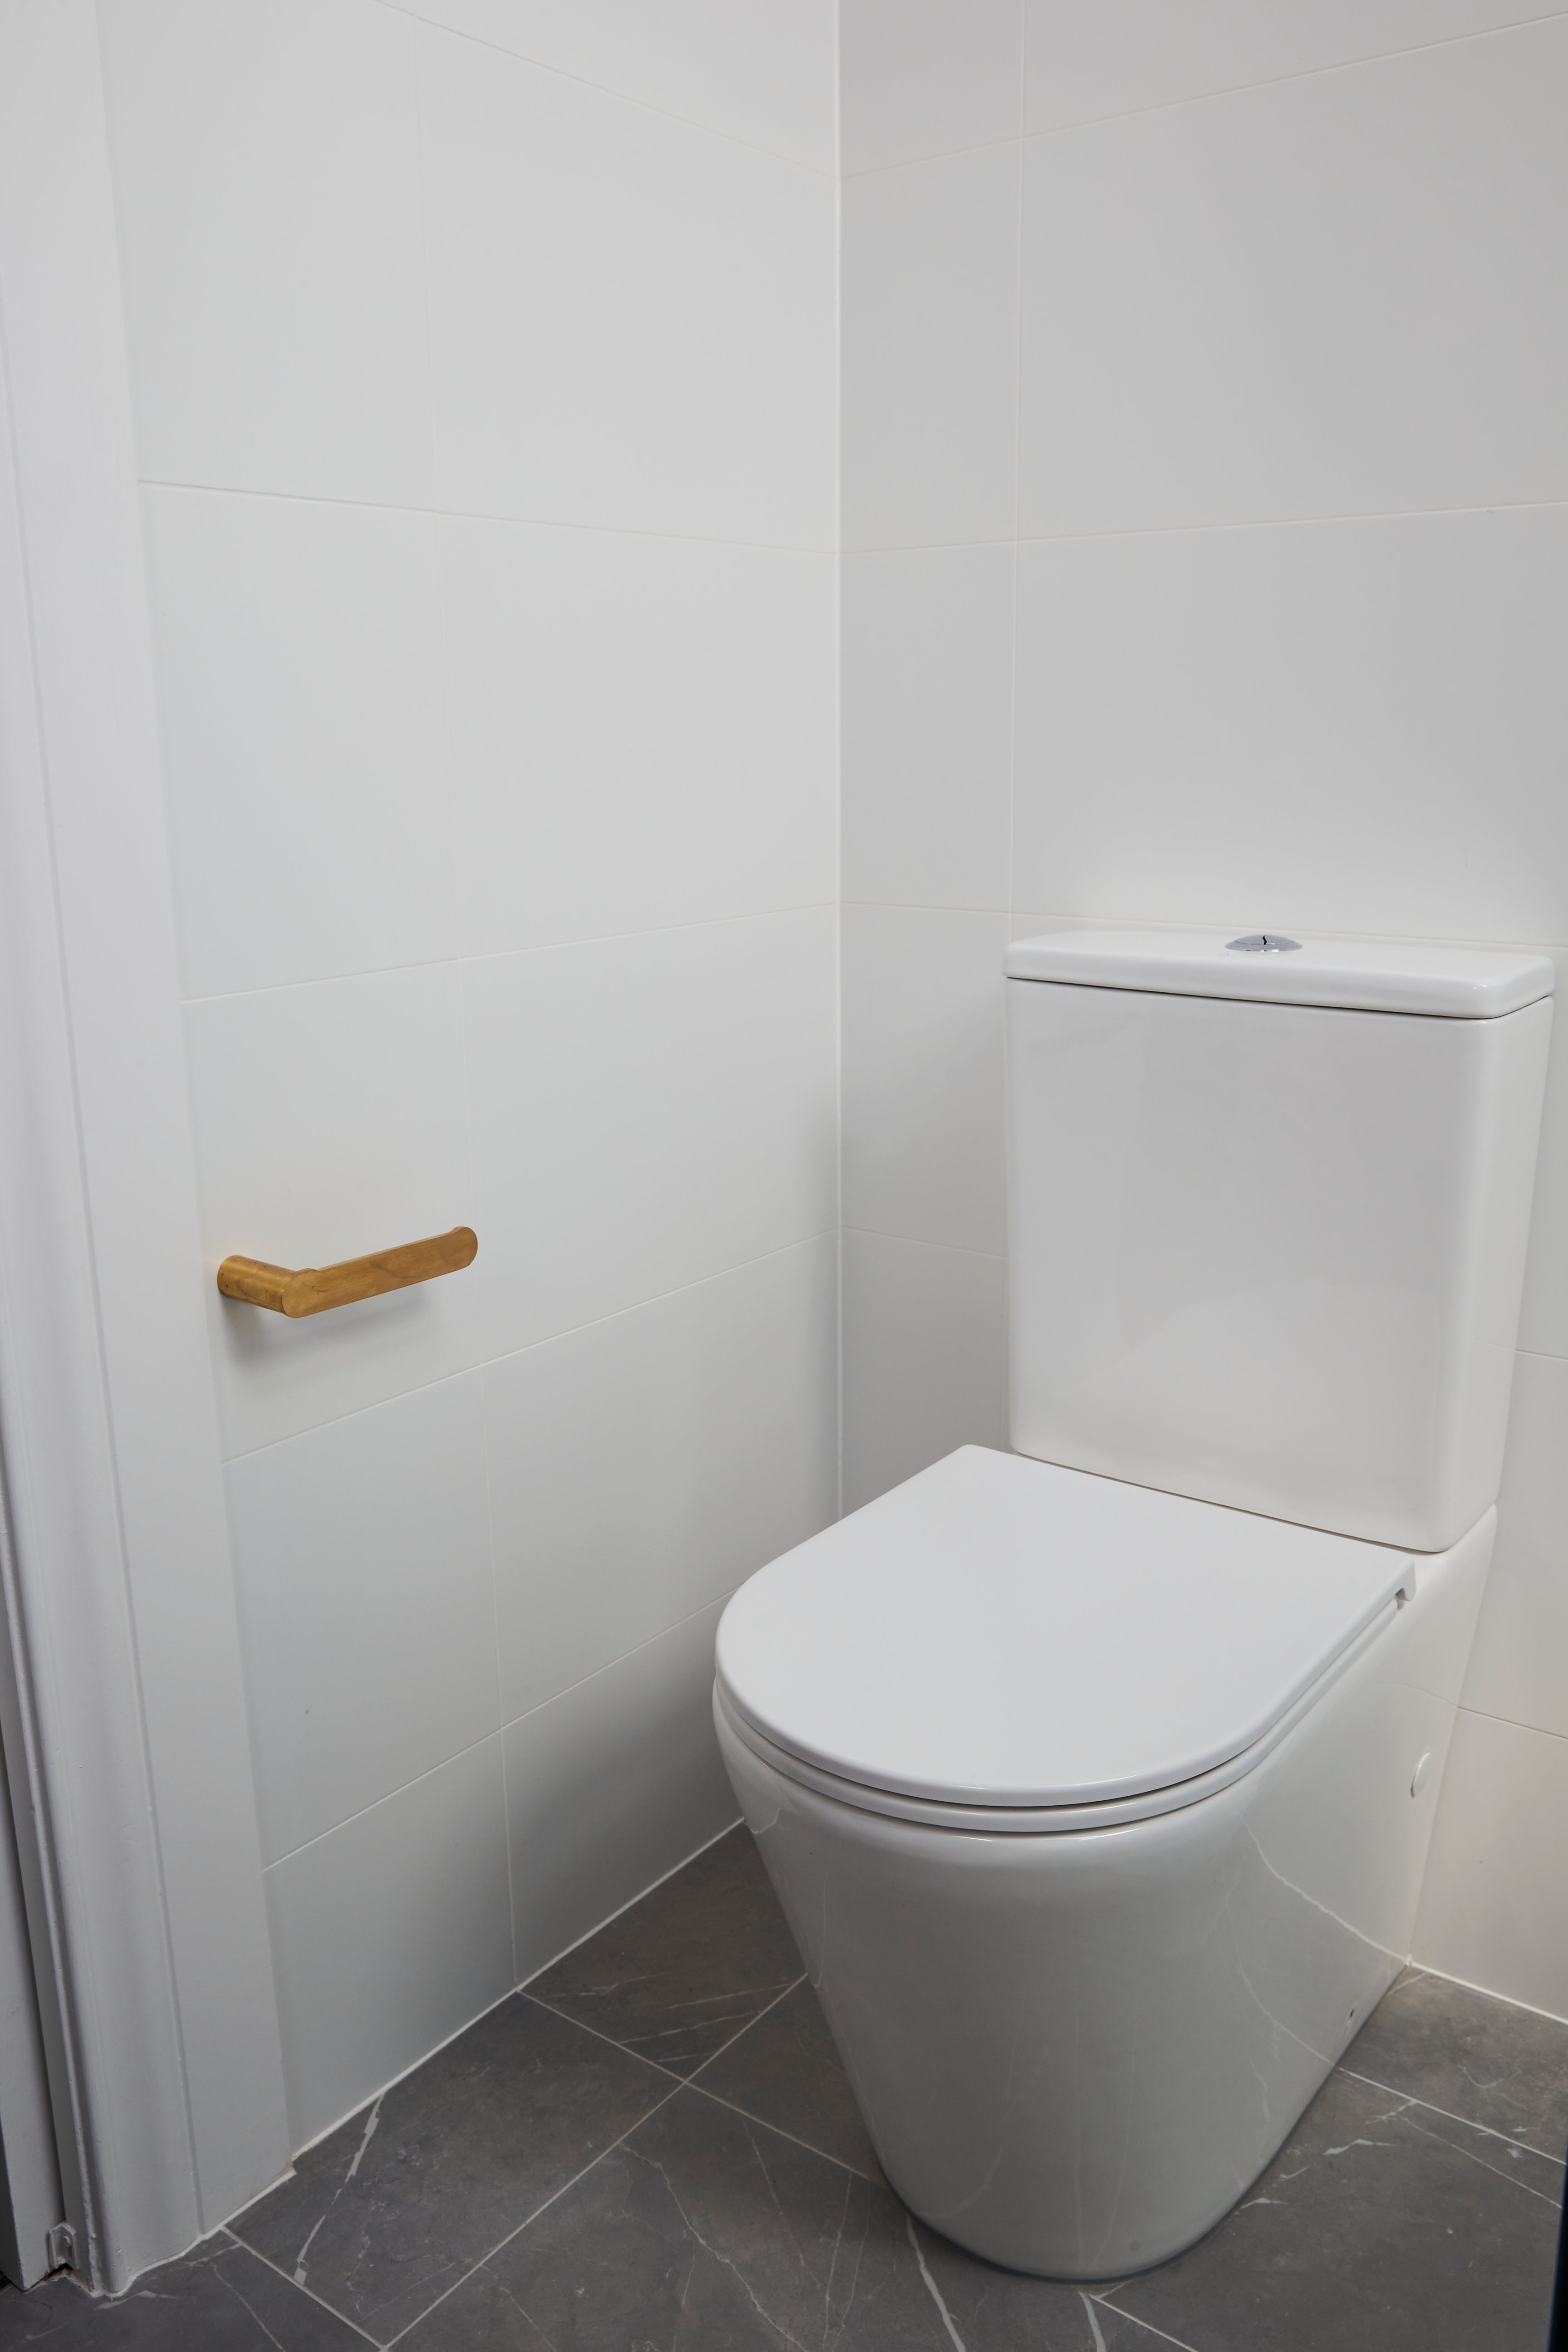 Flinders Toilet Roll Holder in Raw Brass